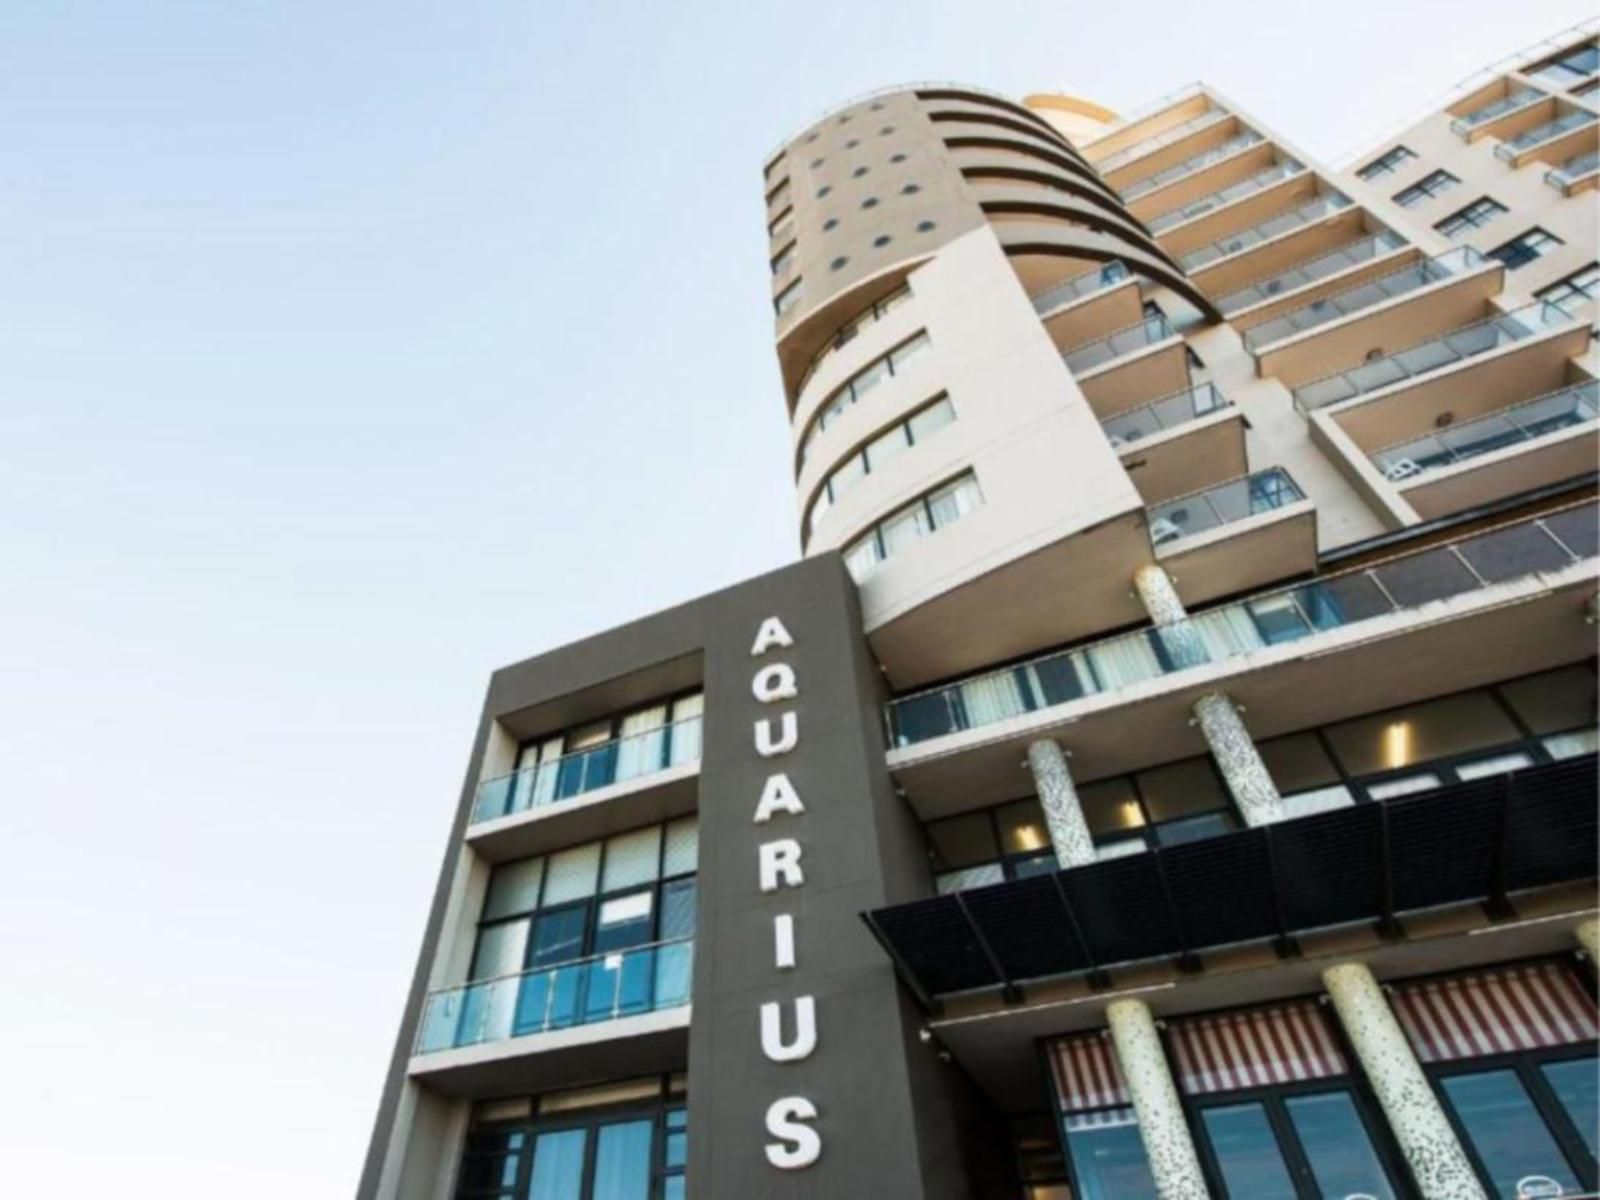 Aquarius Luxury Suites Bloubergstrand Blouberg Western Cape South Africa Building, Architecture, Facade, Skyscraper, City